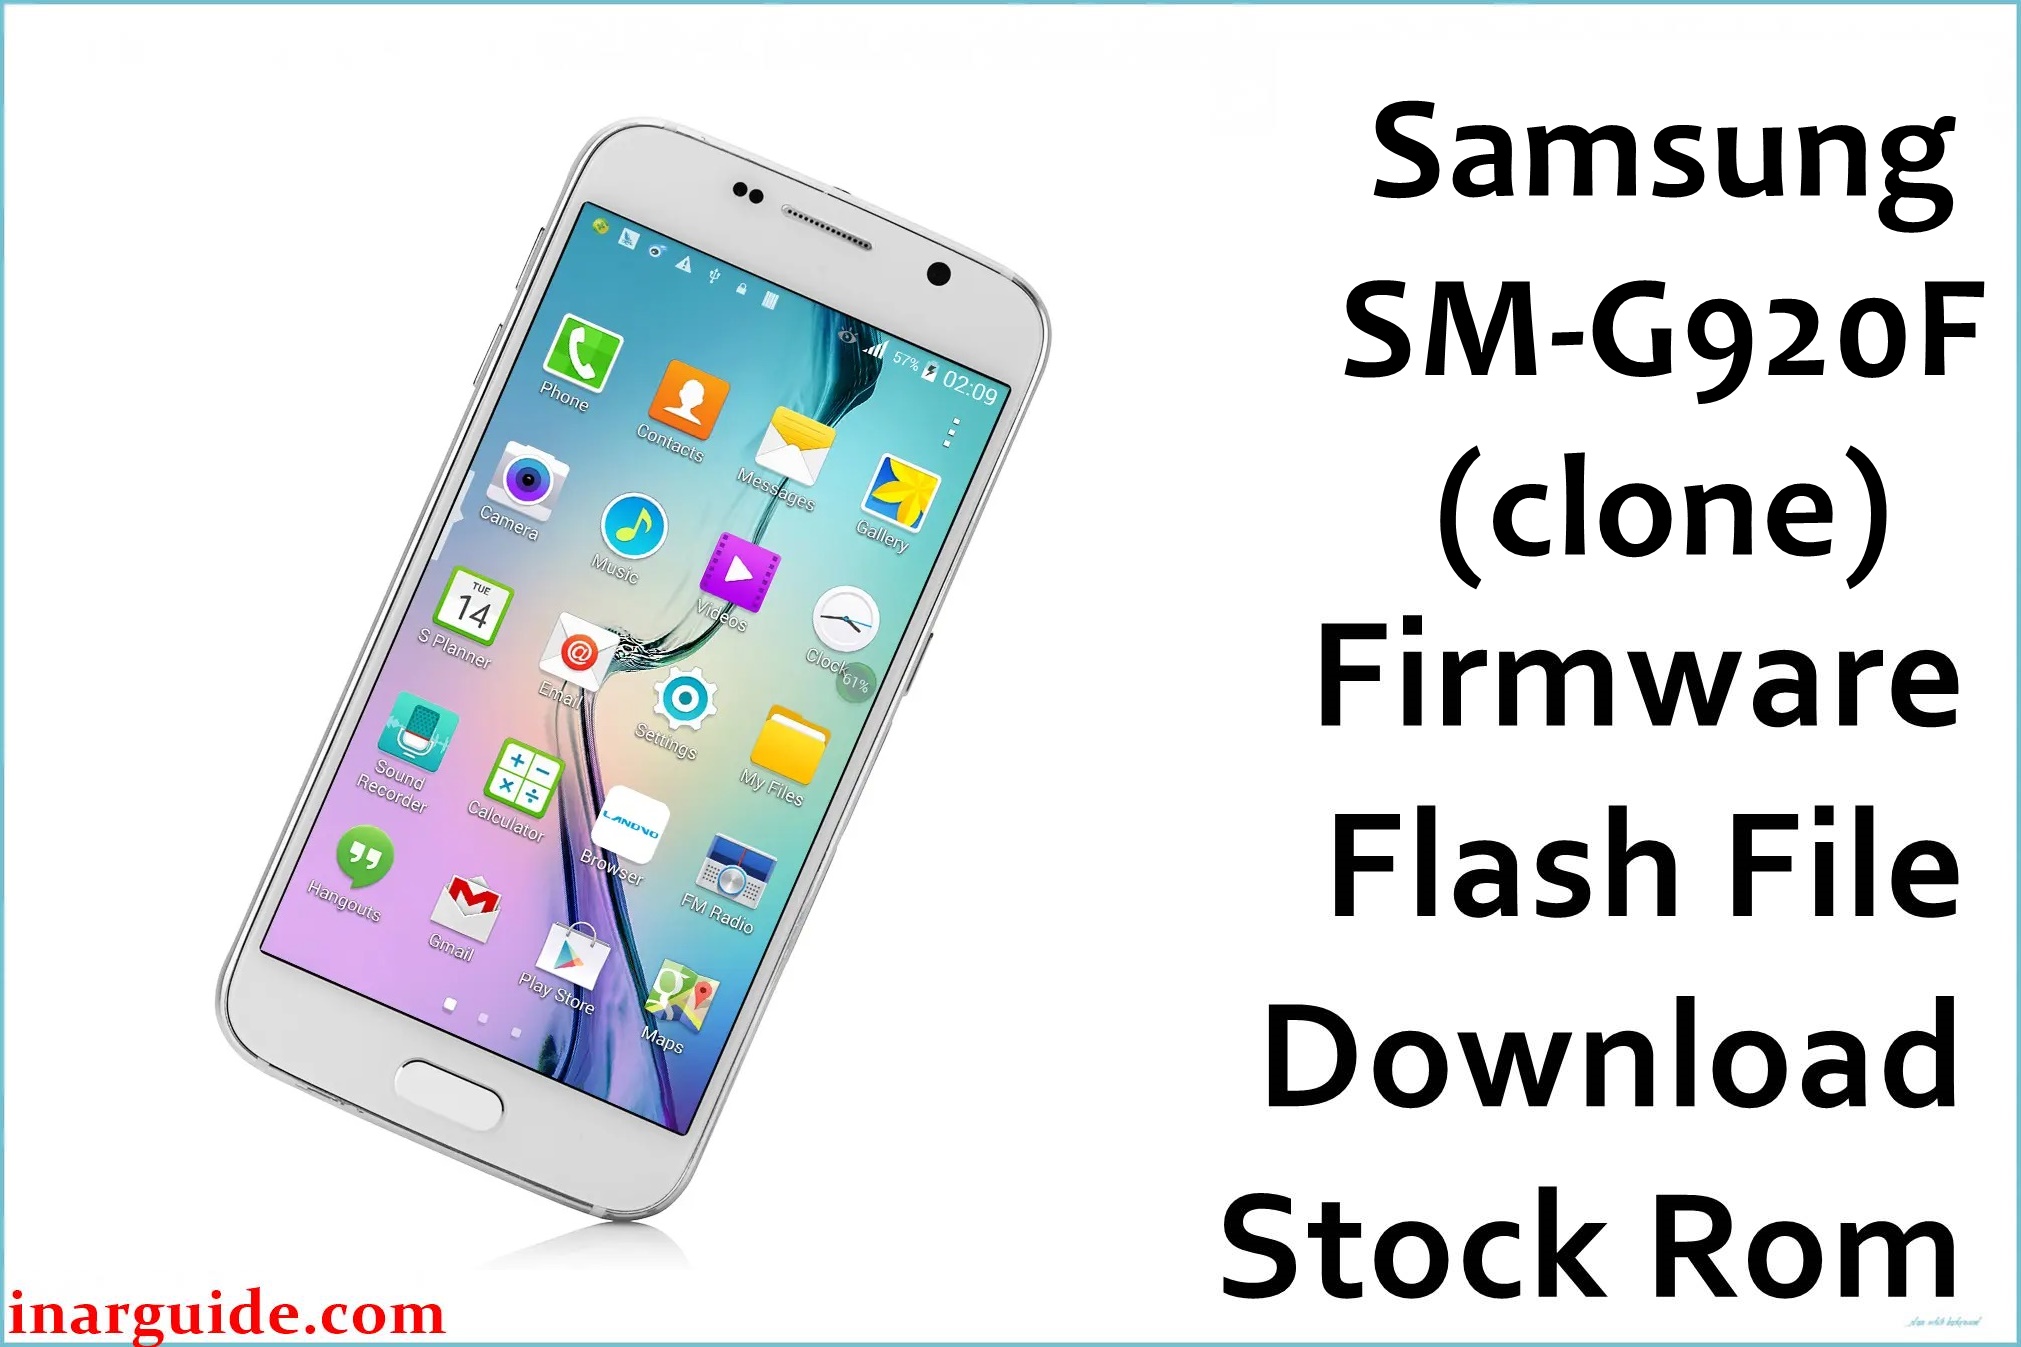 Samsung SM G920F clone